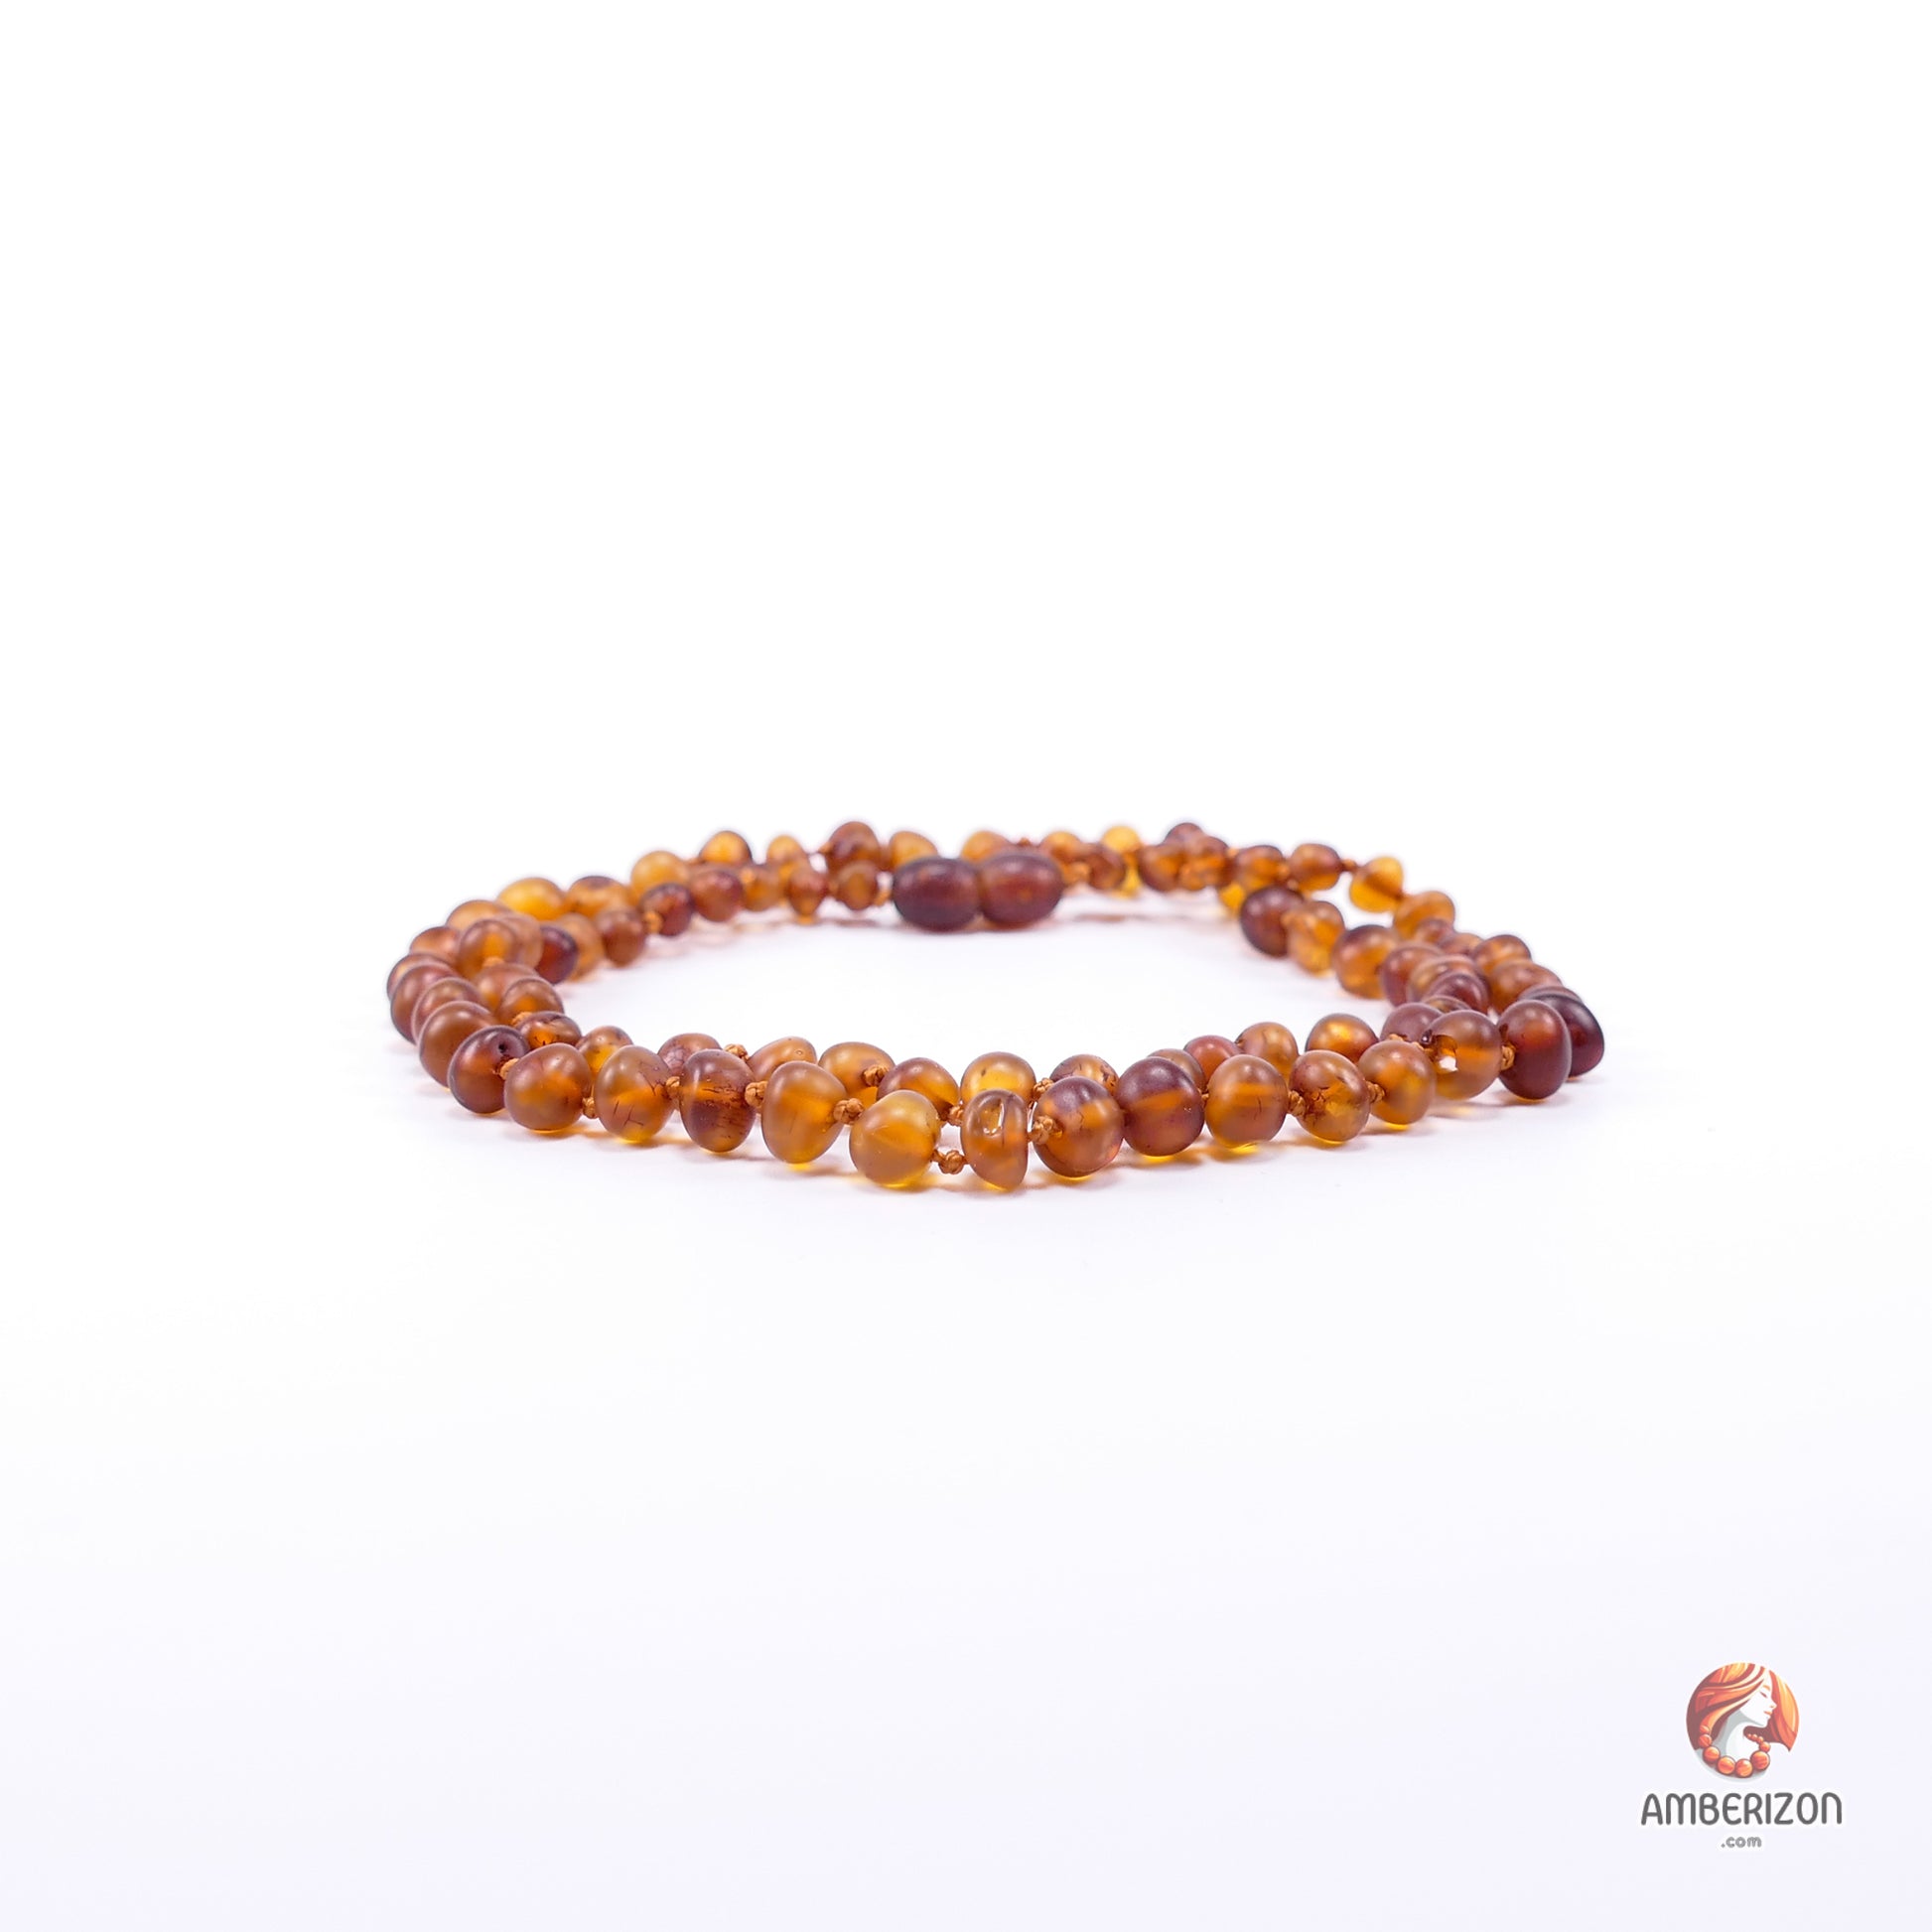 Certified Baltic Amber Necklace - Unisex Size (Rusty Orange, Matte)